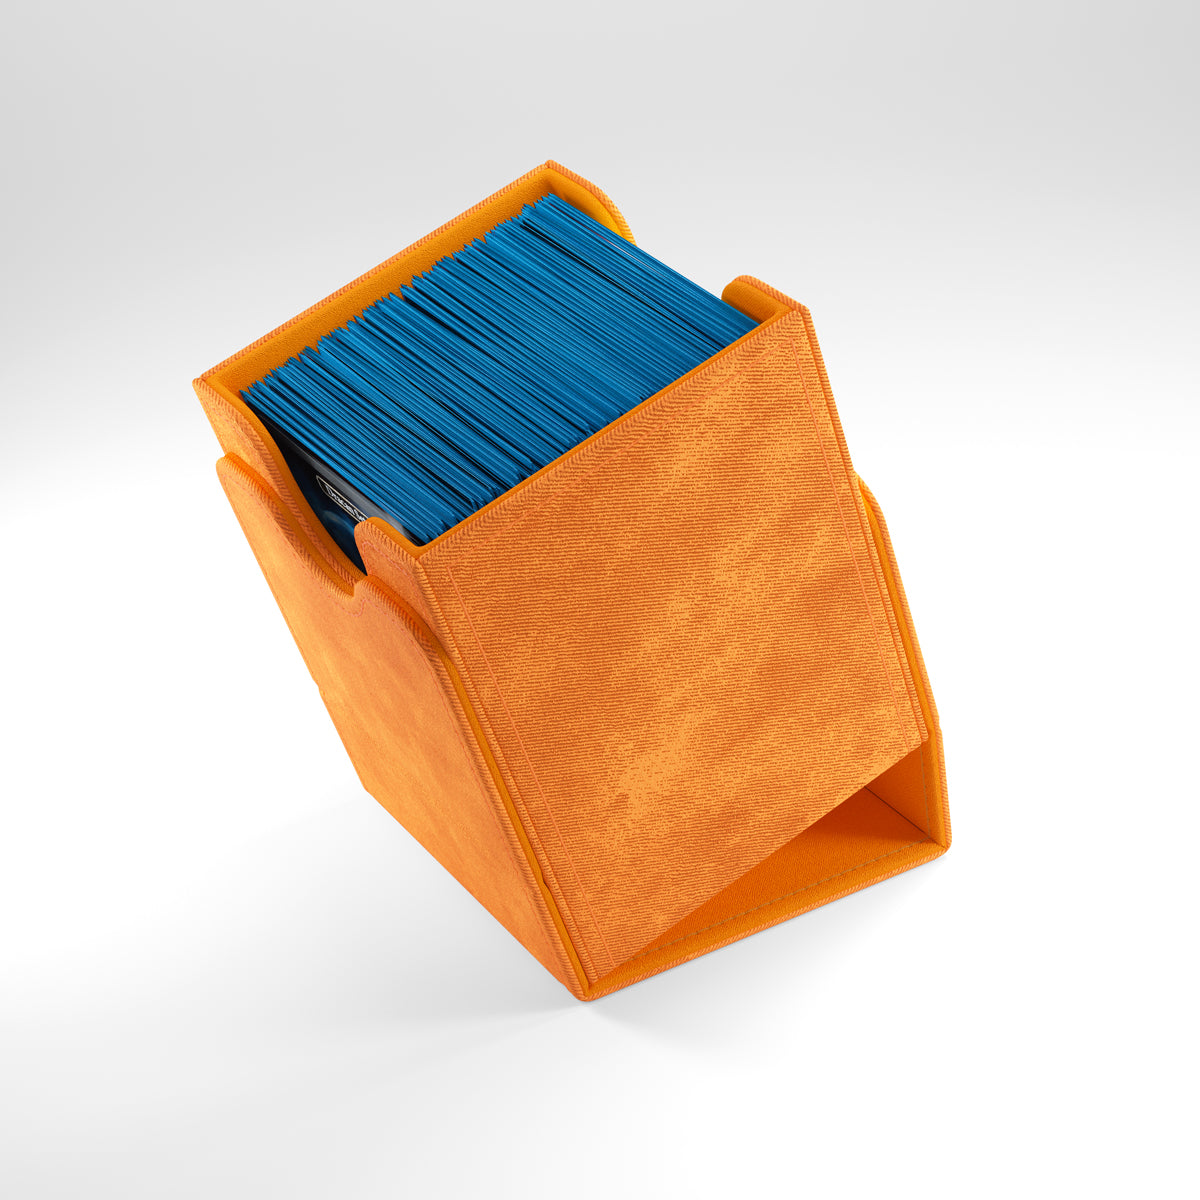 Squire 100+ XL Convertible Orange Deck Box (100ct)